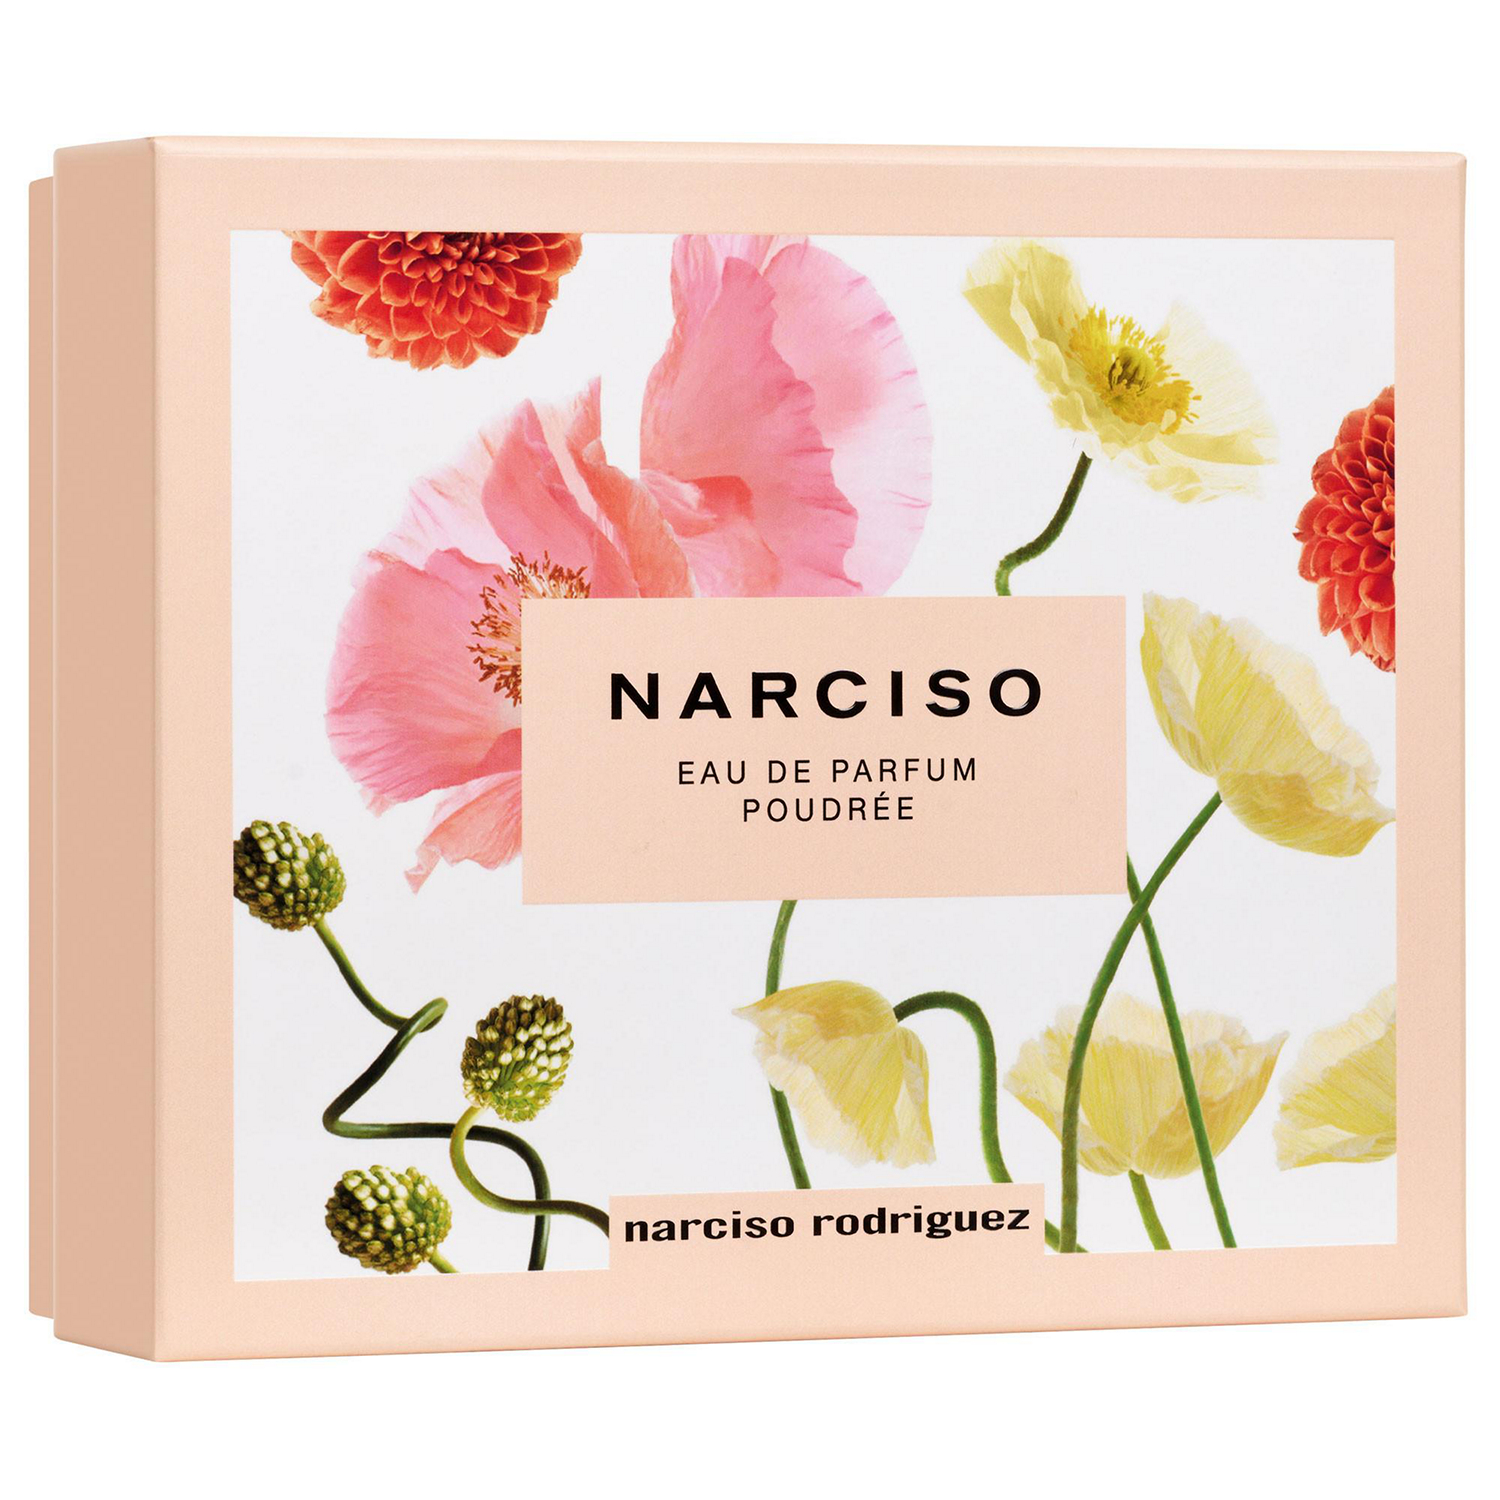 Narciso Poudrée EDP 50ml Gift Set